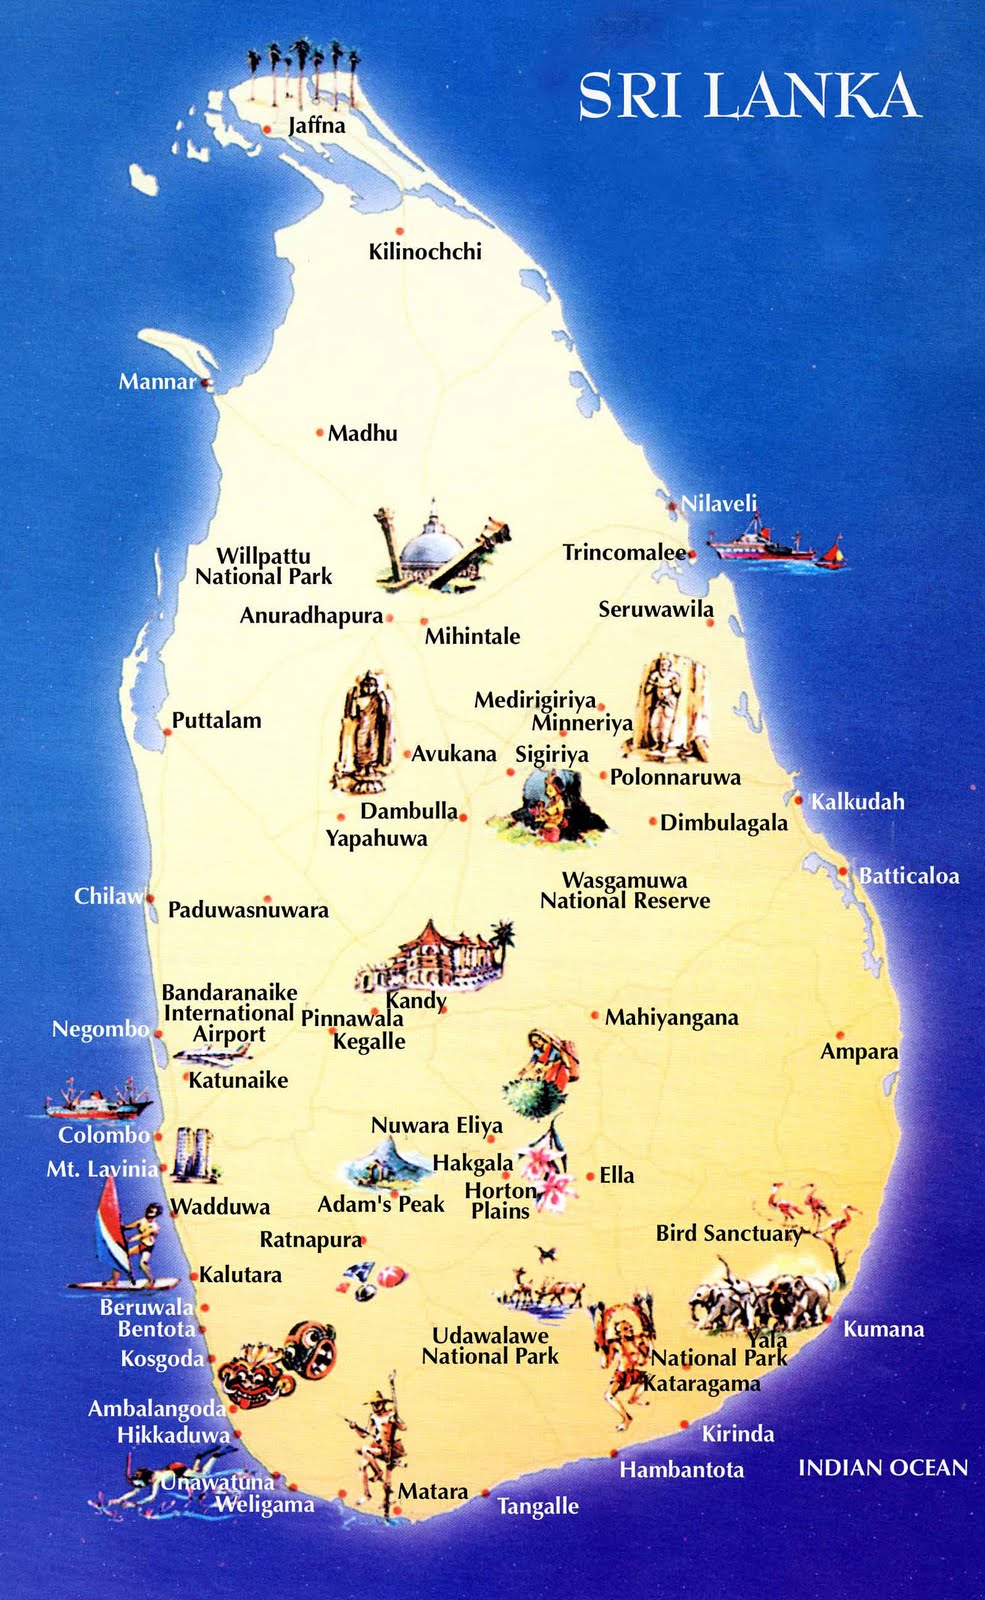 SRI LANKA - GEOGRAPHICAL MAPS OF SRI LANKA